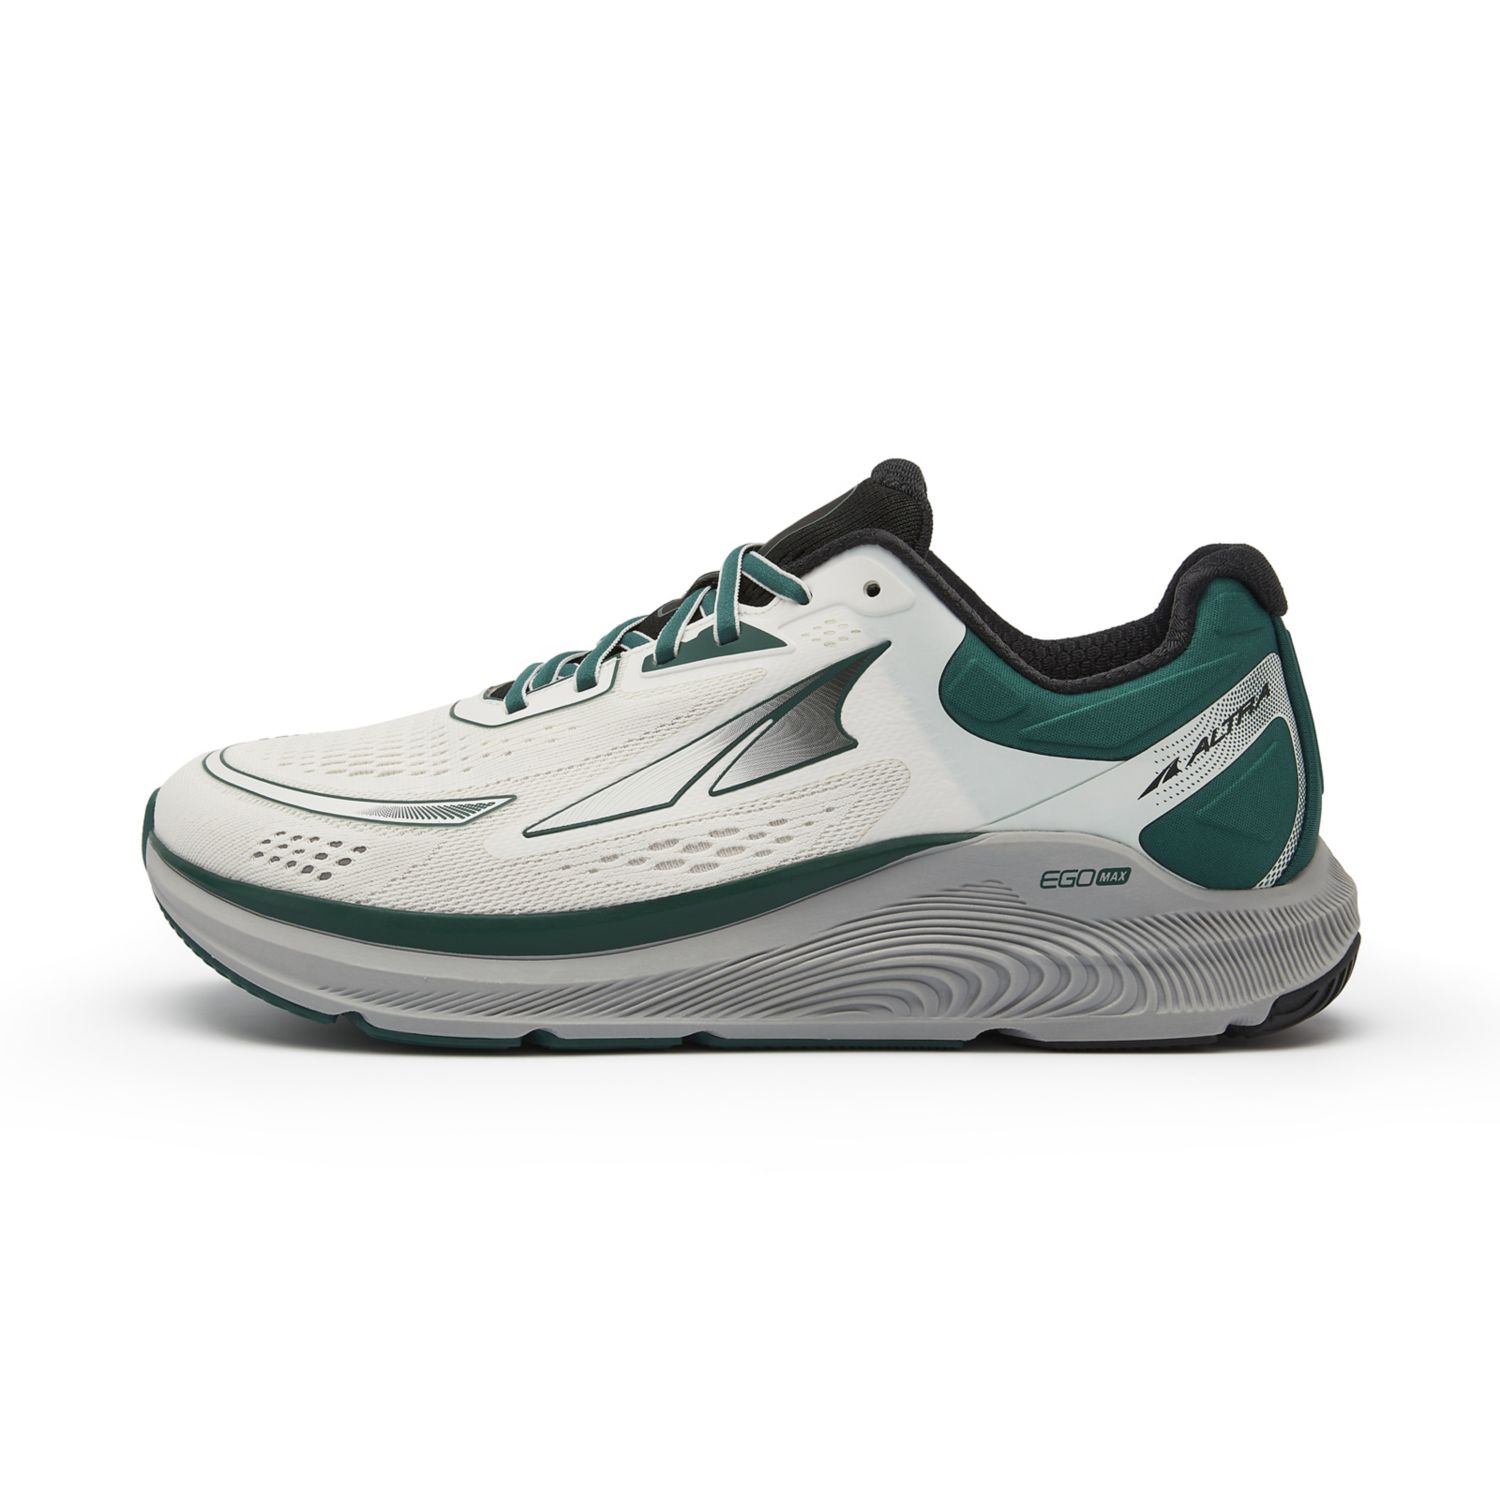 White / Green Altra Paradigm 6 Men's Road Running Shoes | Ireland-14865329